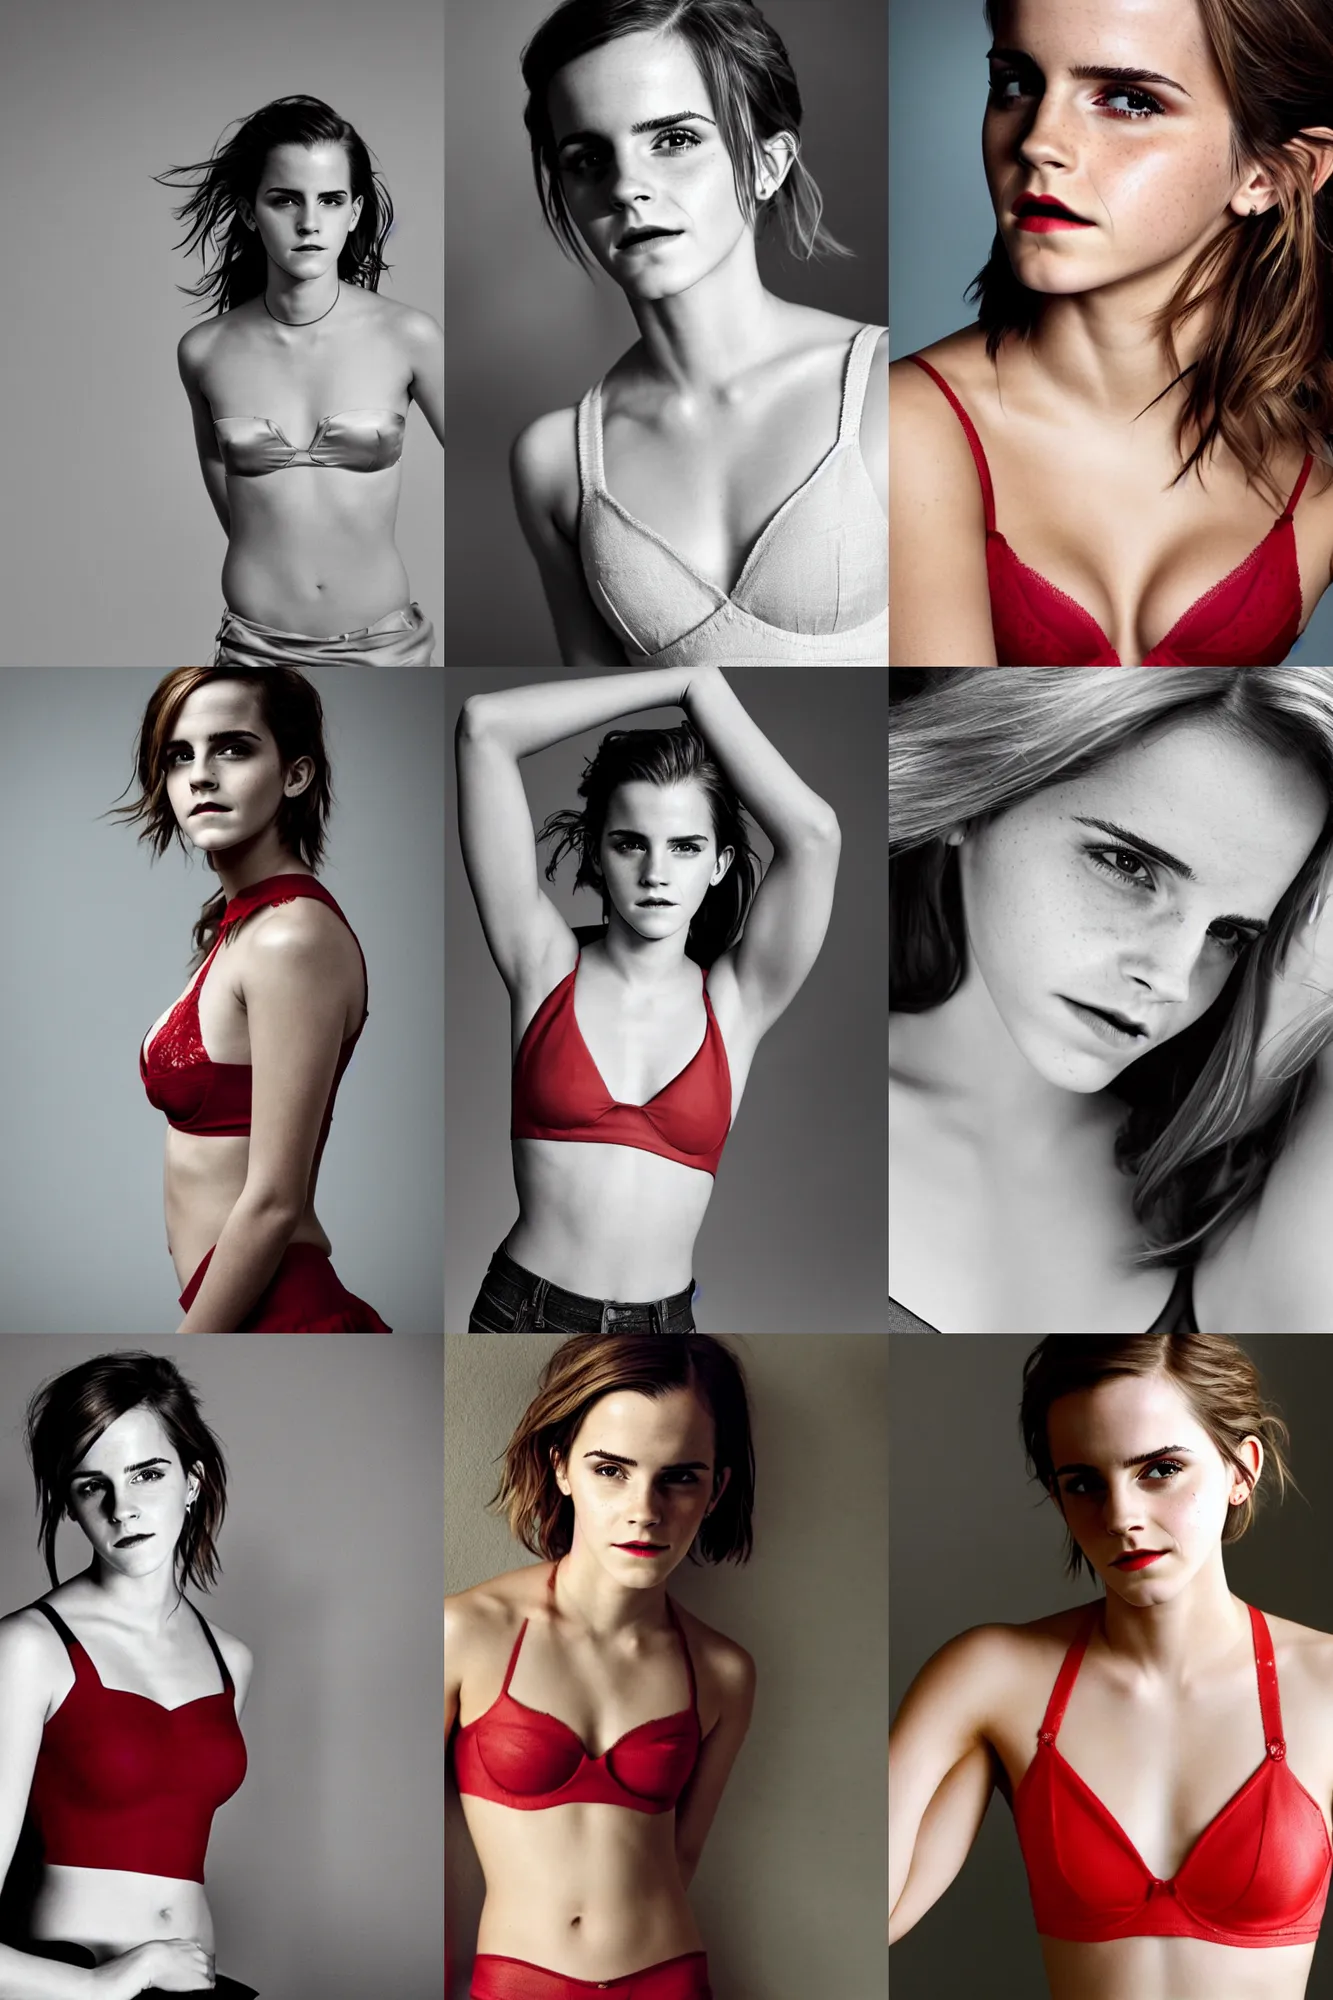 emma watson modeling red bra, high angle photo focused